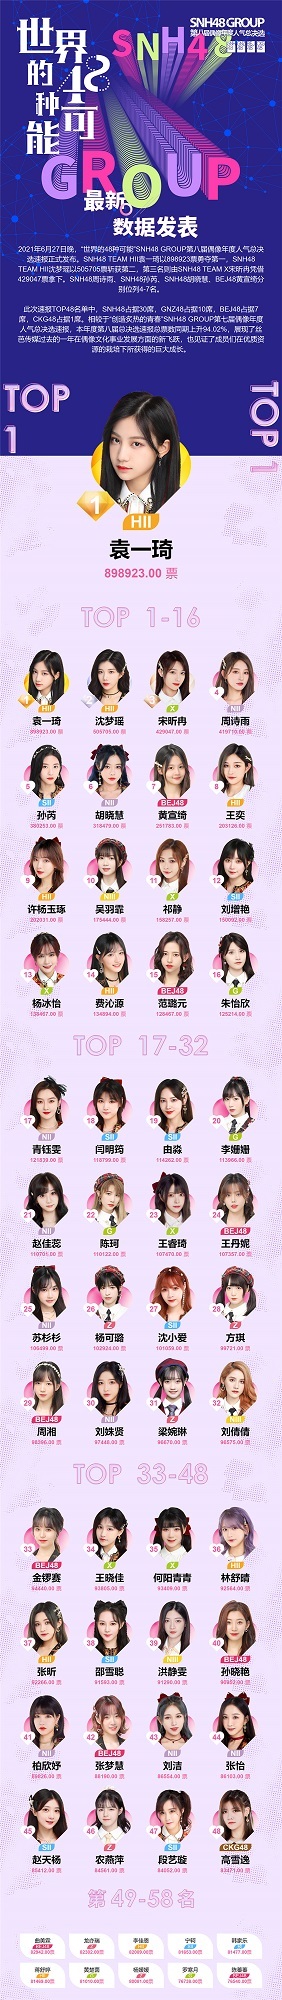  SNH48 GROUP第八届总决选速报发布 (7).jpg